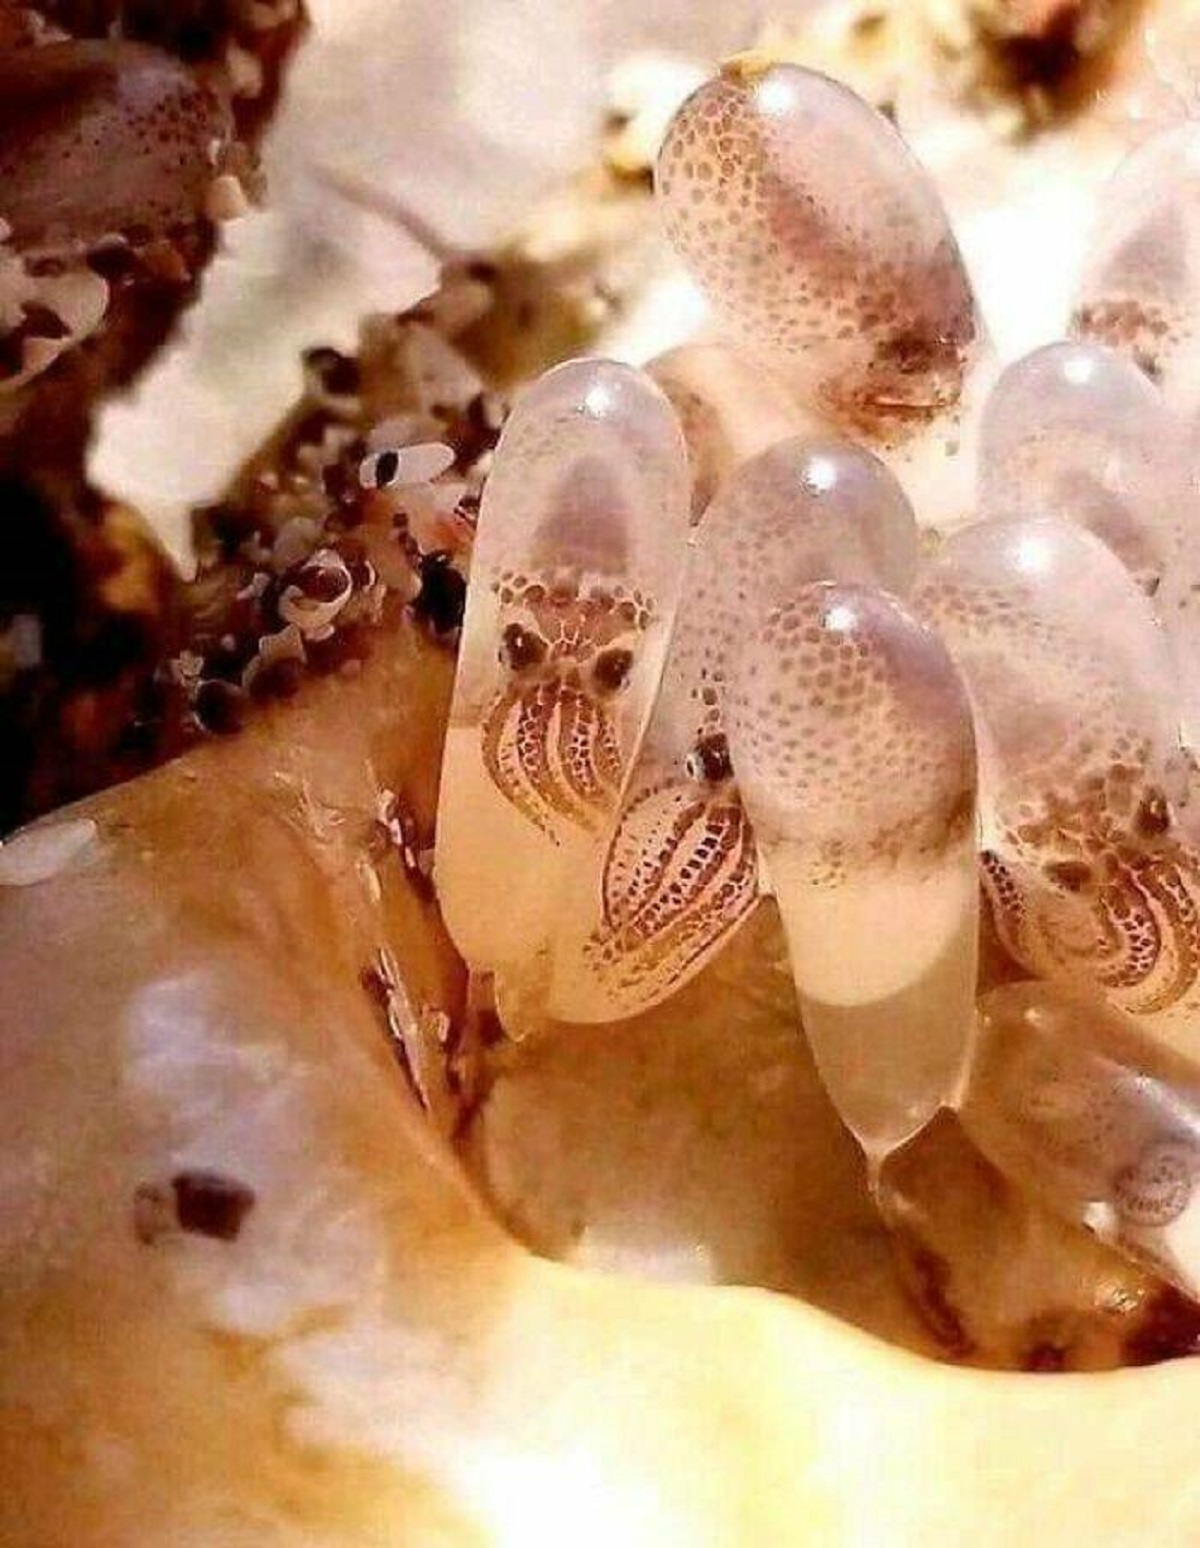 "Octopus Babies Inside Of Their Eggs"